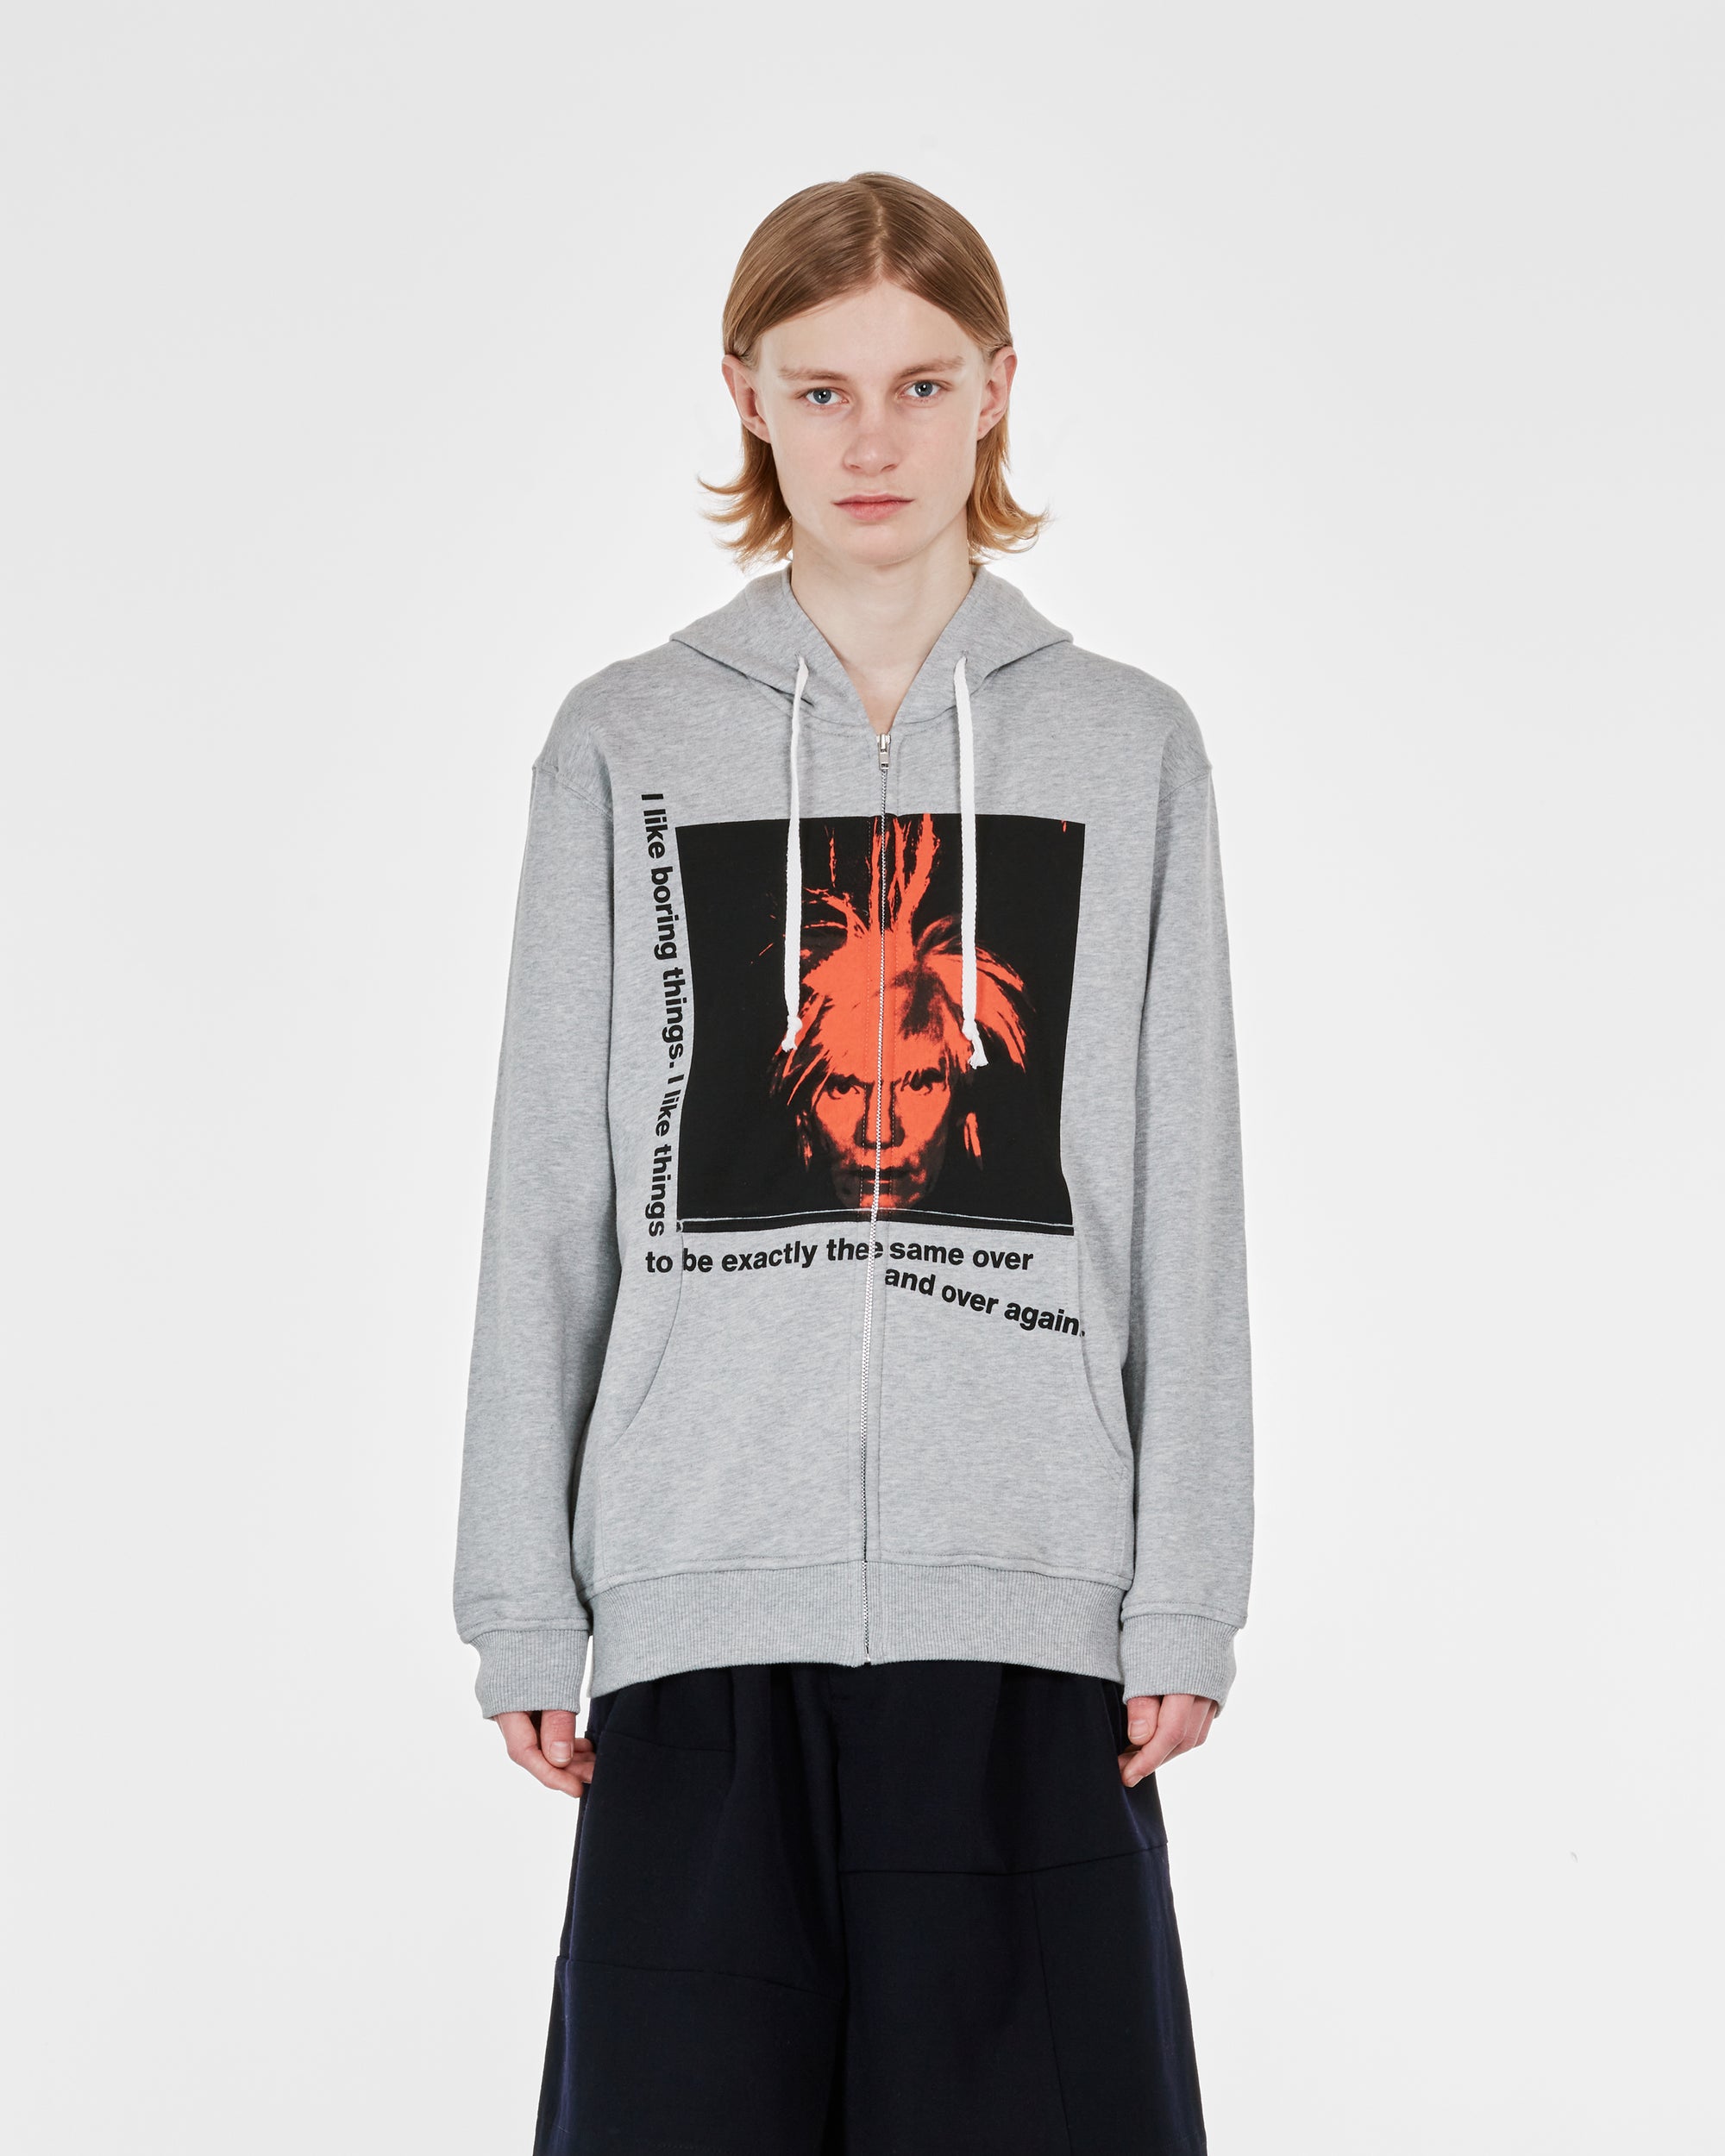 CDG Shirt - Andy Warhol Men's Hooded Sweatshirt - (Grey/Print J) view 2